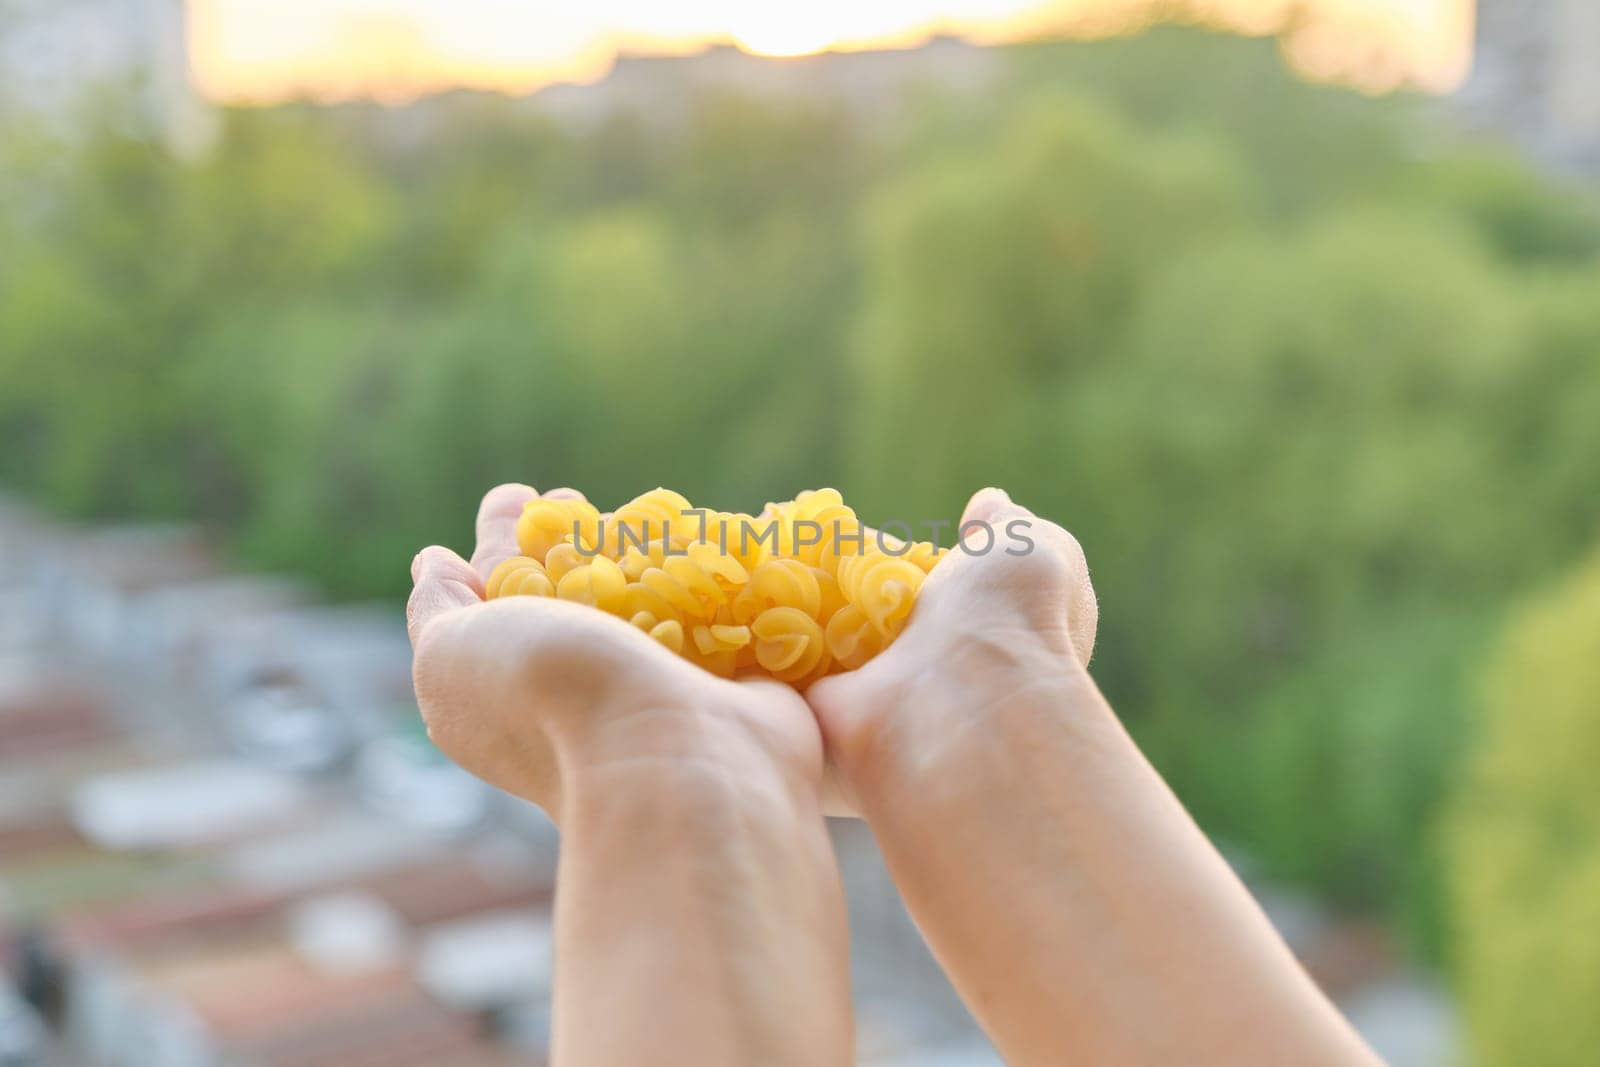 Spiral pasta, close-up of hands holding pasta, background sunset sky golden hour